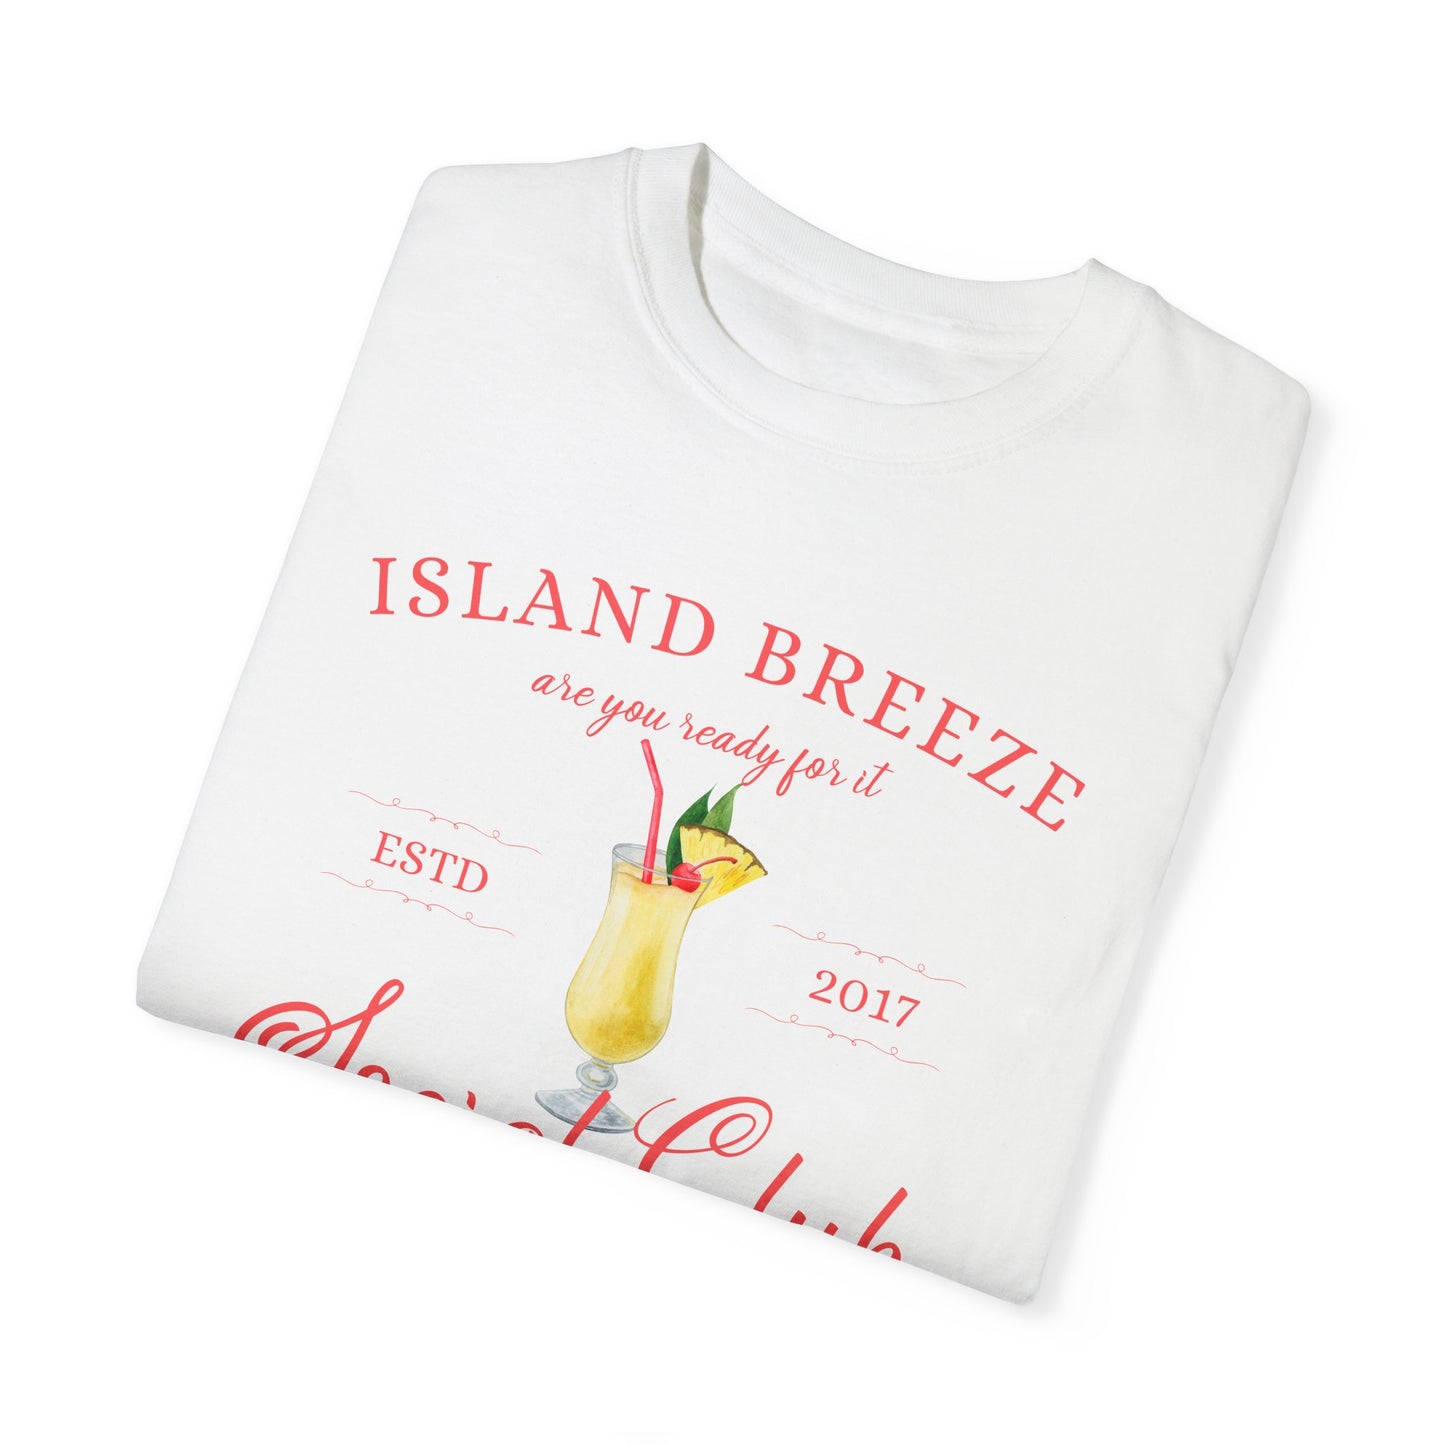 Island Breeze Social Club Tee